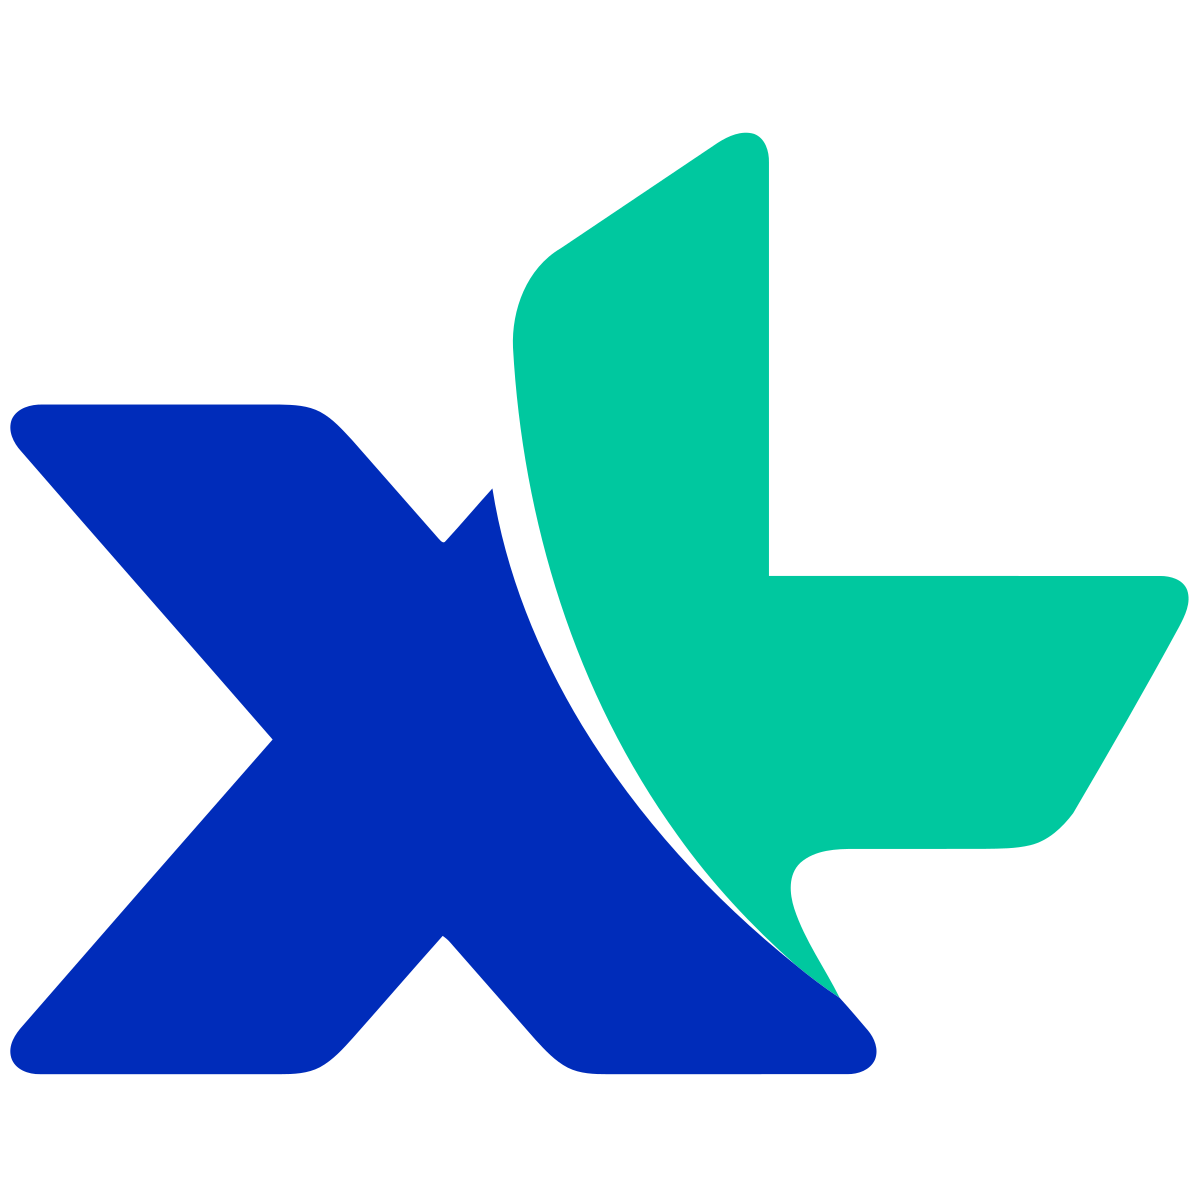 XL Axiata Logo, image, download logo | LogoWiki.net